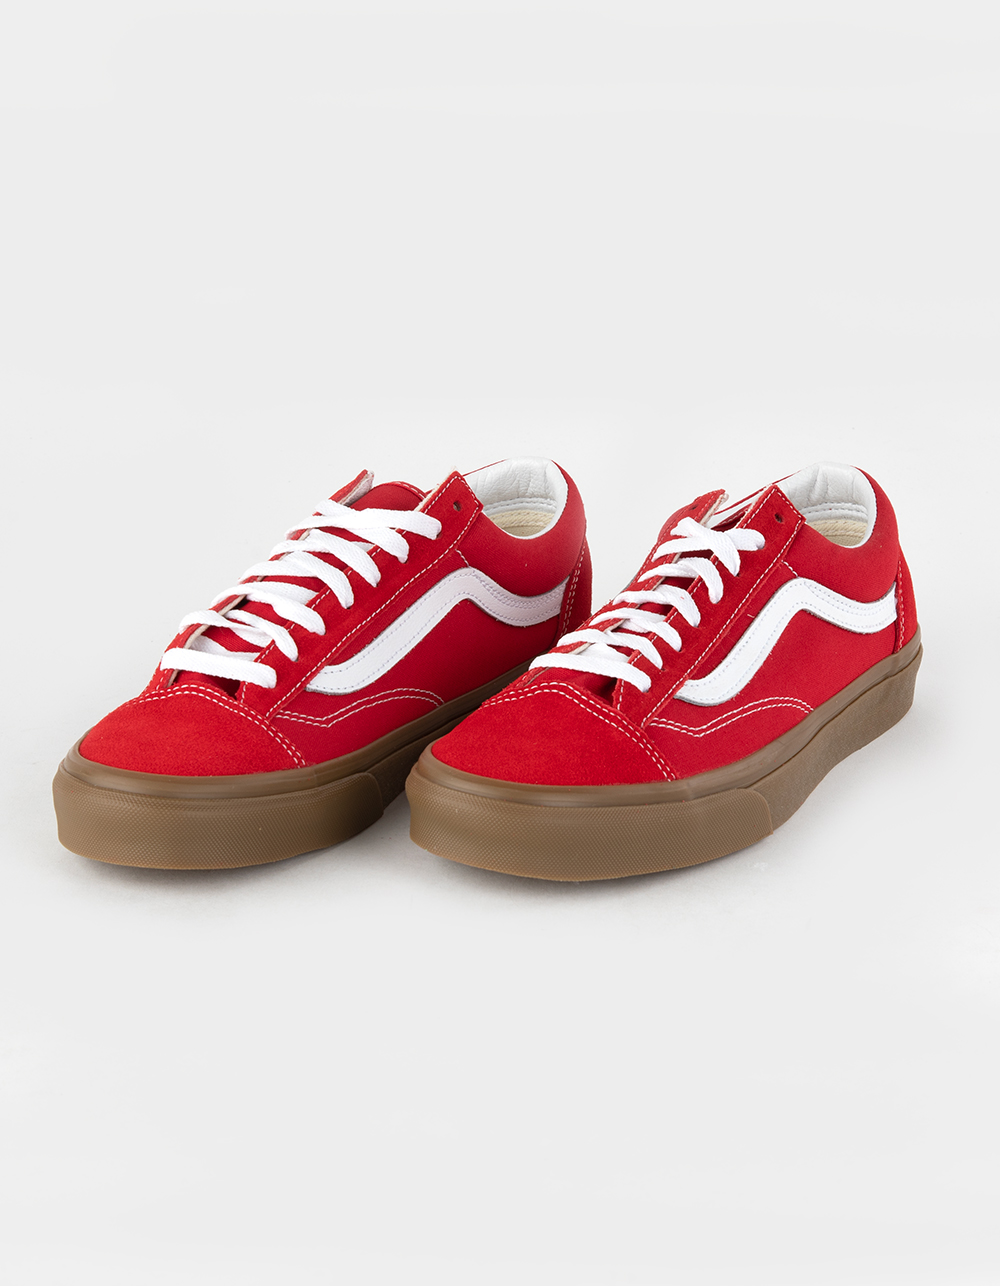 VANS Gum Style 36 Shoes - RED | Tillys